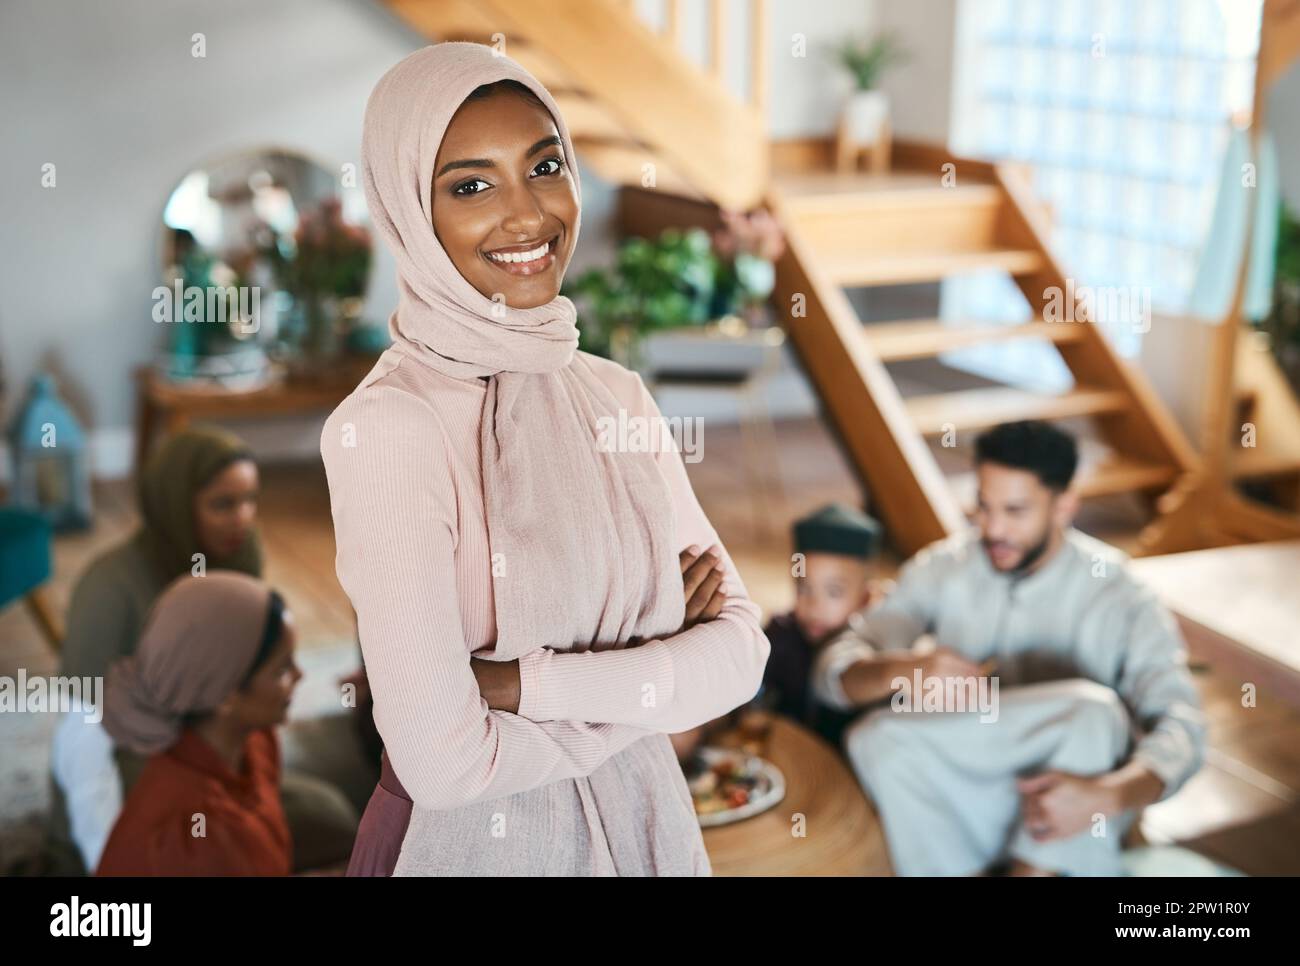 Muslim islam woman on EID with family at house in .Pakistan, Saudi Arabia or Iran to celebrate ramadan. Young girl smile in hijab with food in solidar Stock Photo